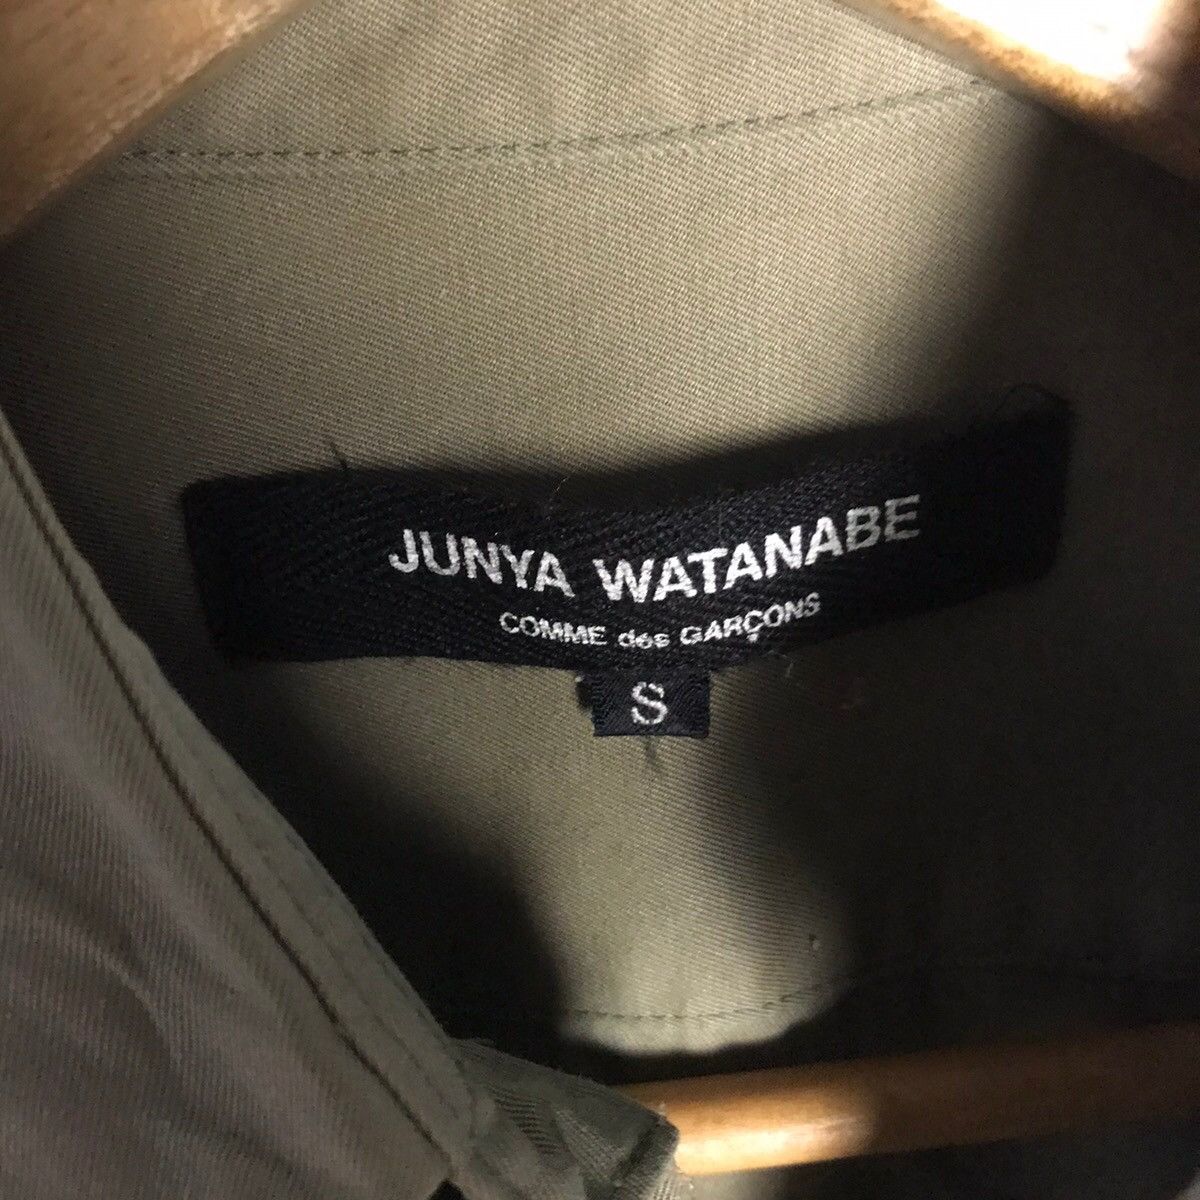 Junya watanabe x cdg two tone button up ad1999 shirt - 3